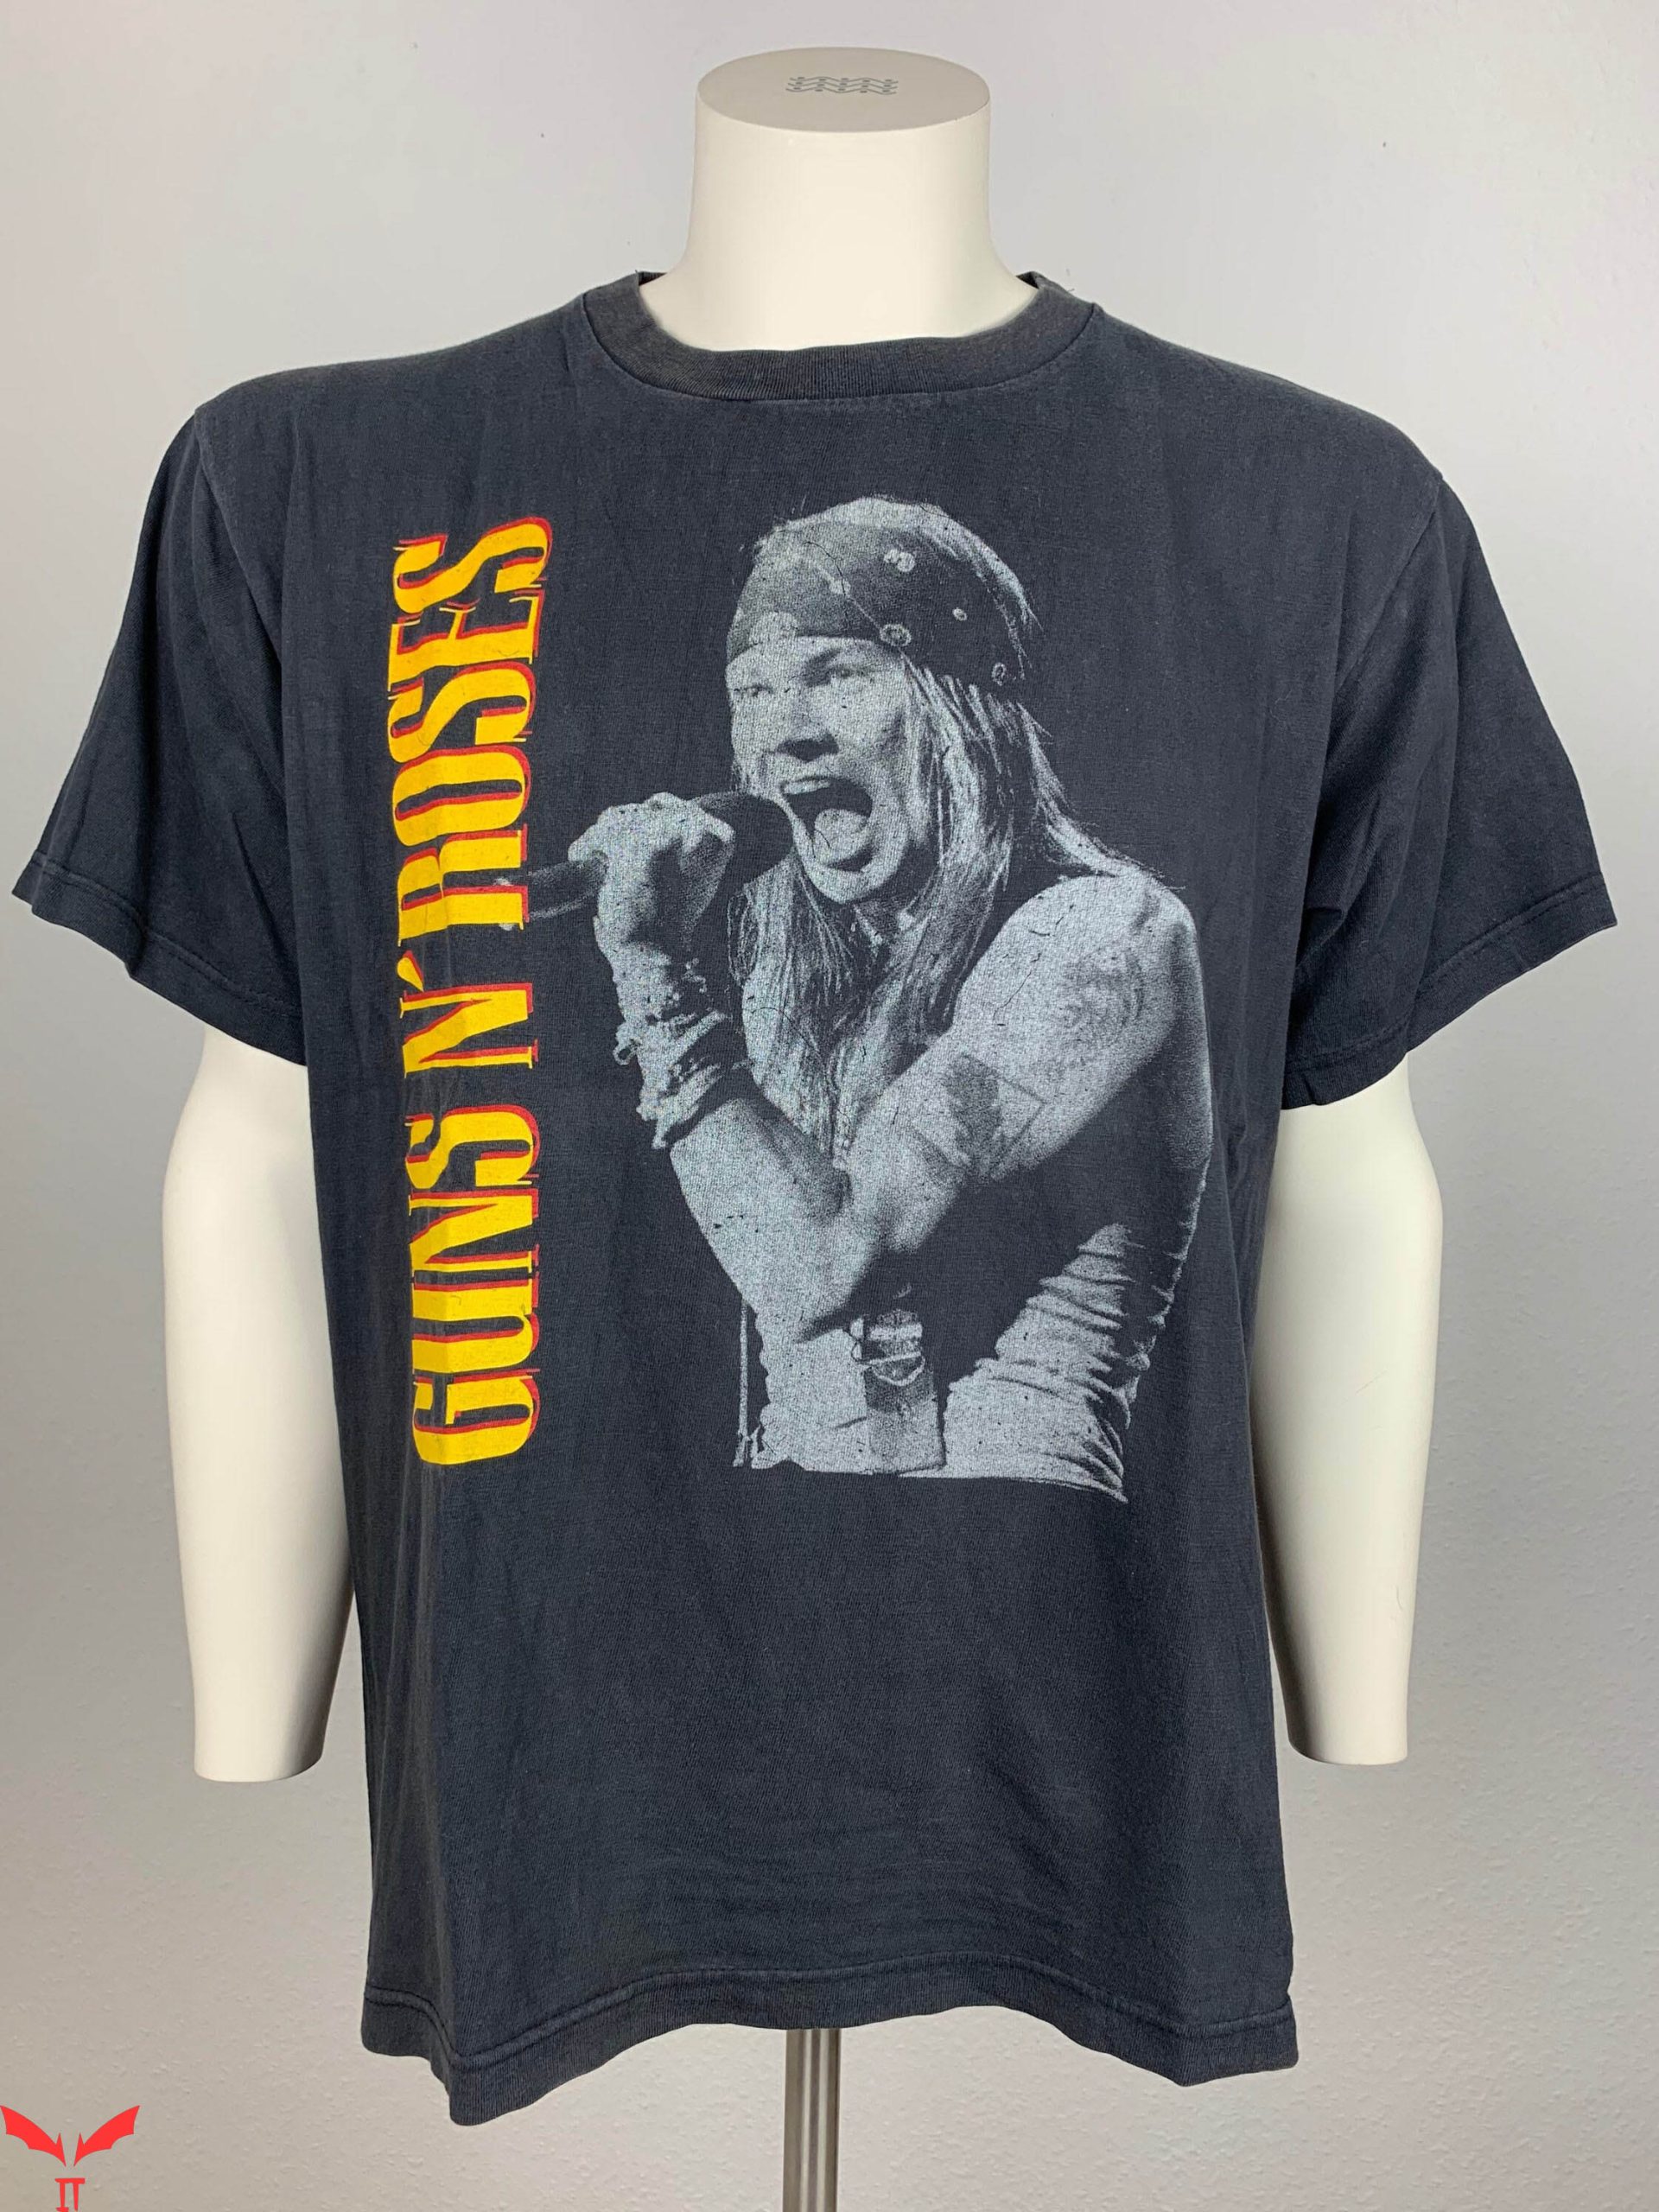 Axl Rose T-Shirt Axl Rose Guns N Roses 1992 Vintage T-Shirt